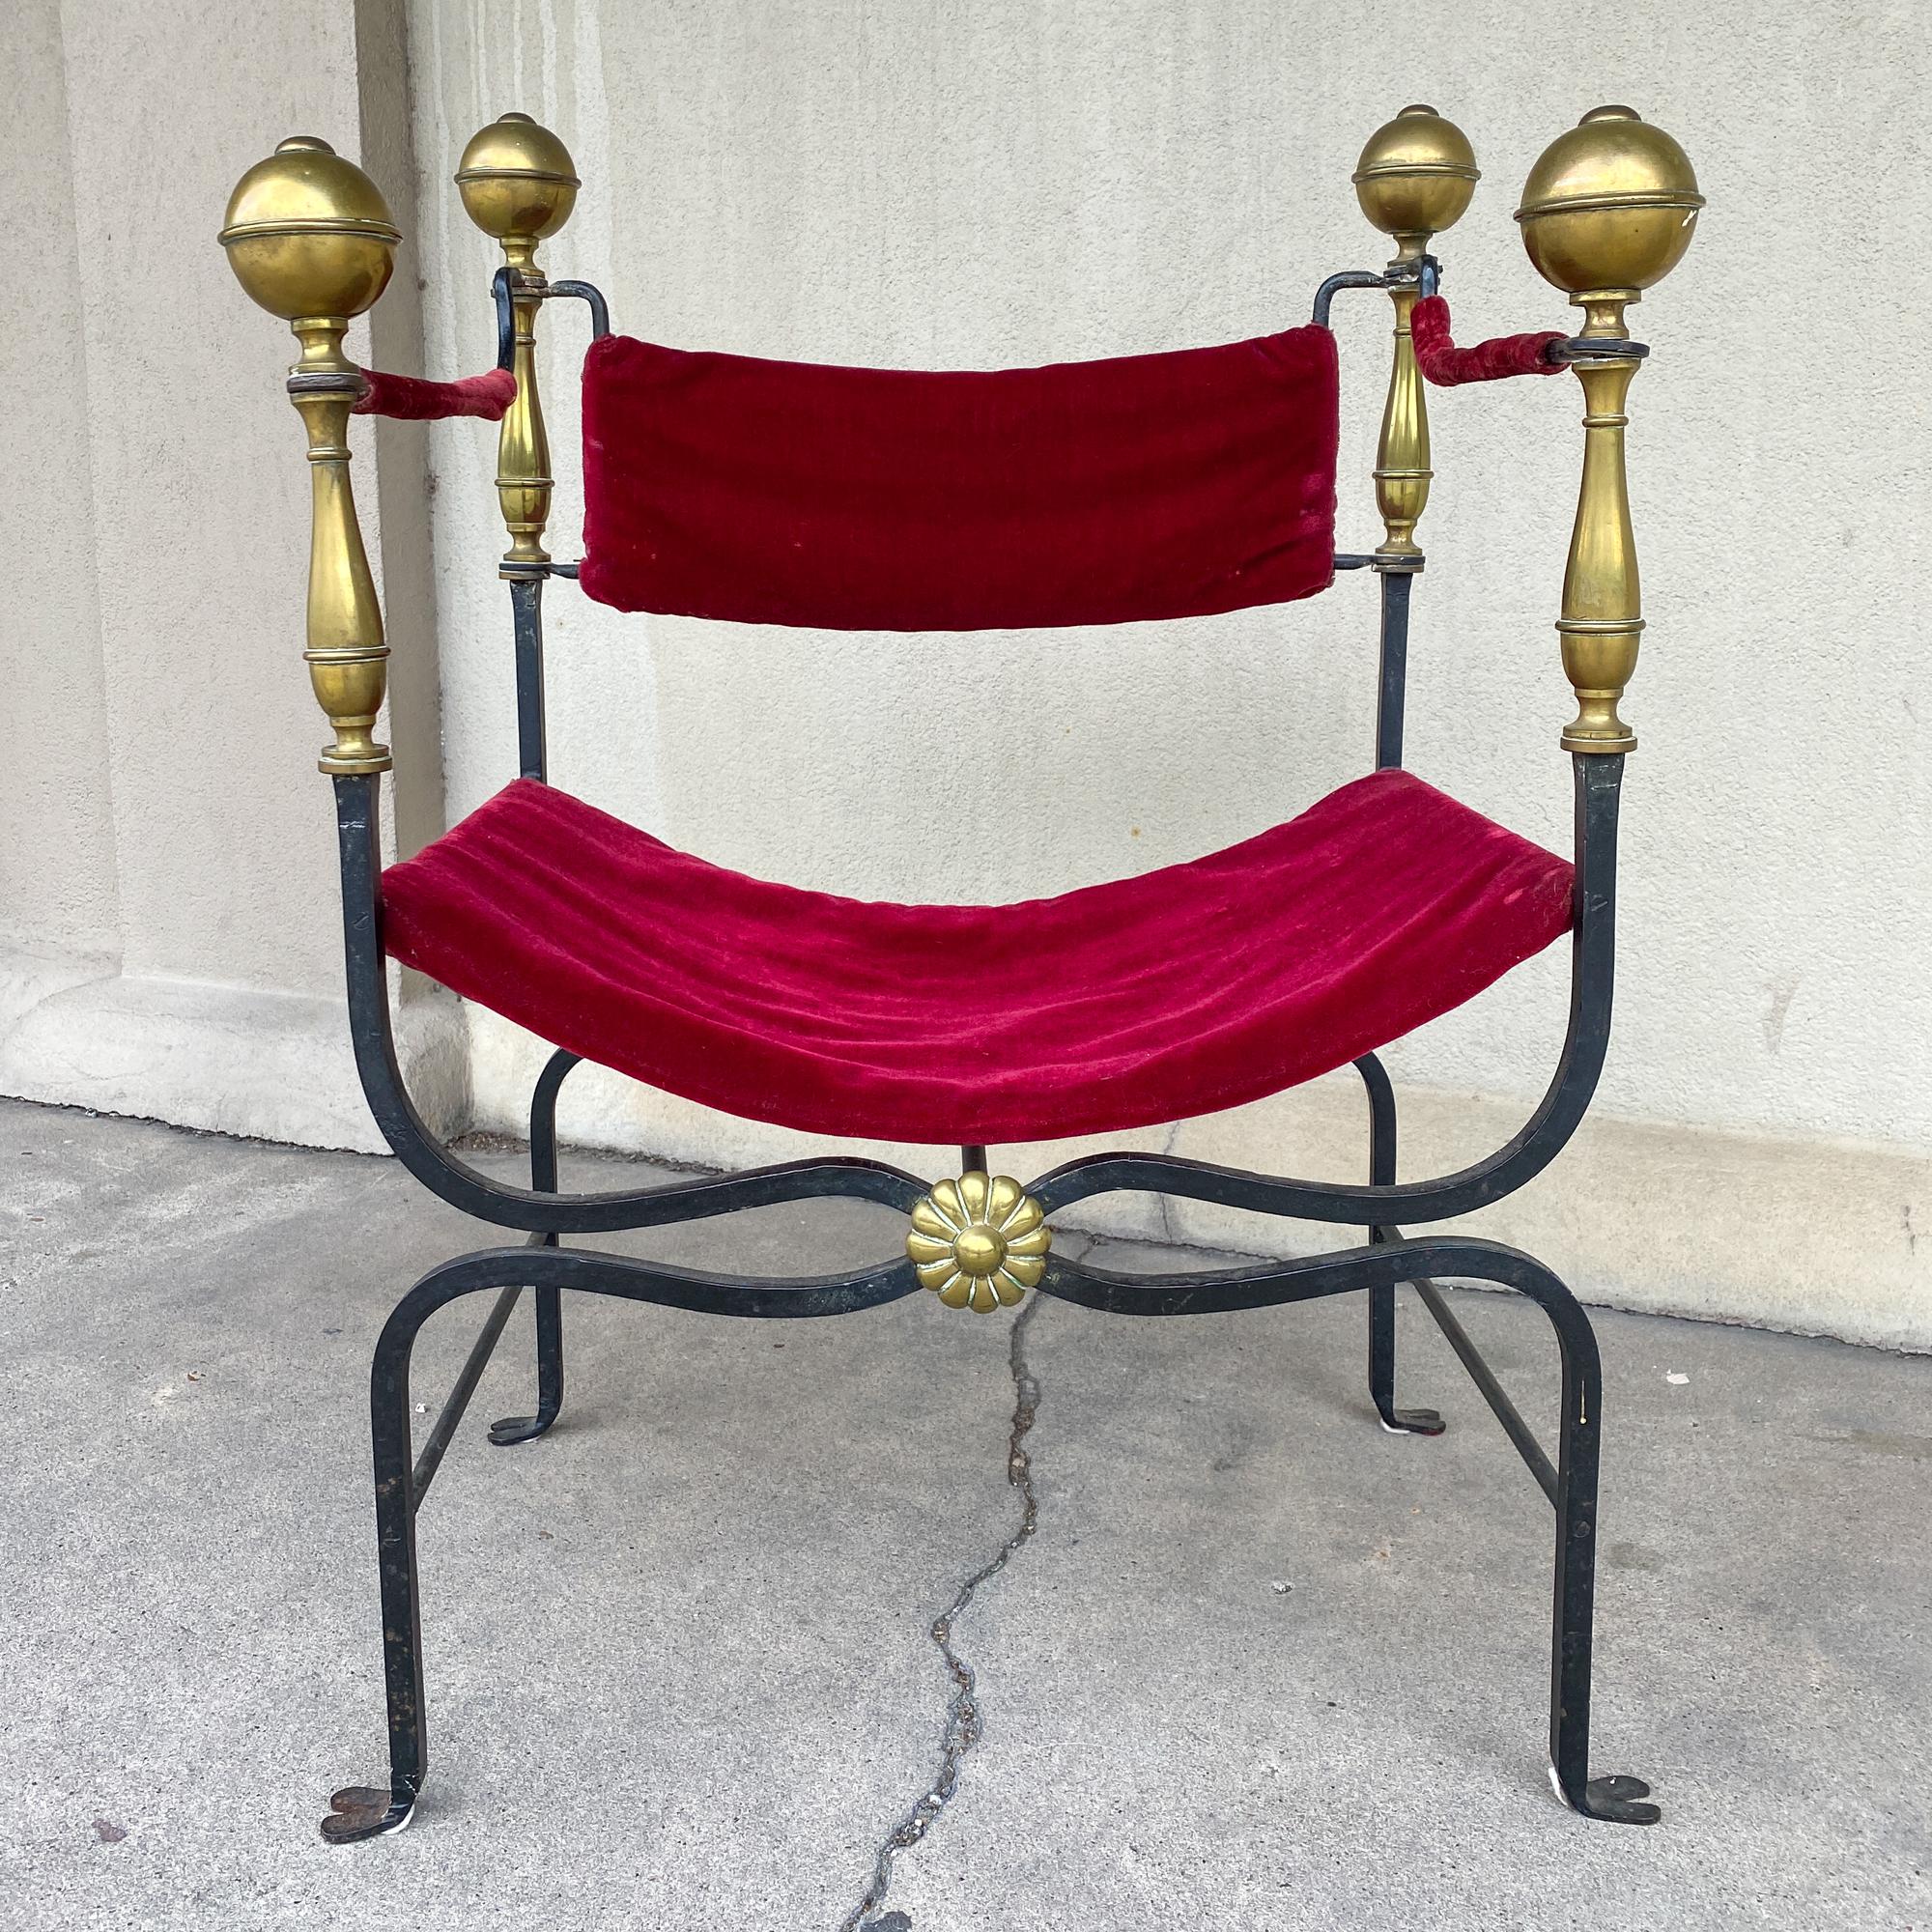 This midcentury Spanish iron Savonarola chair features the classic 